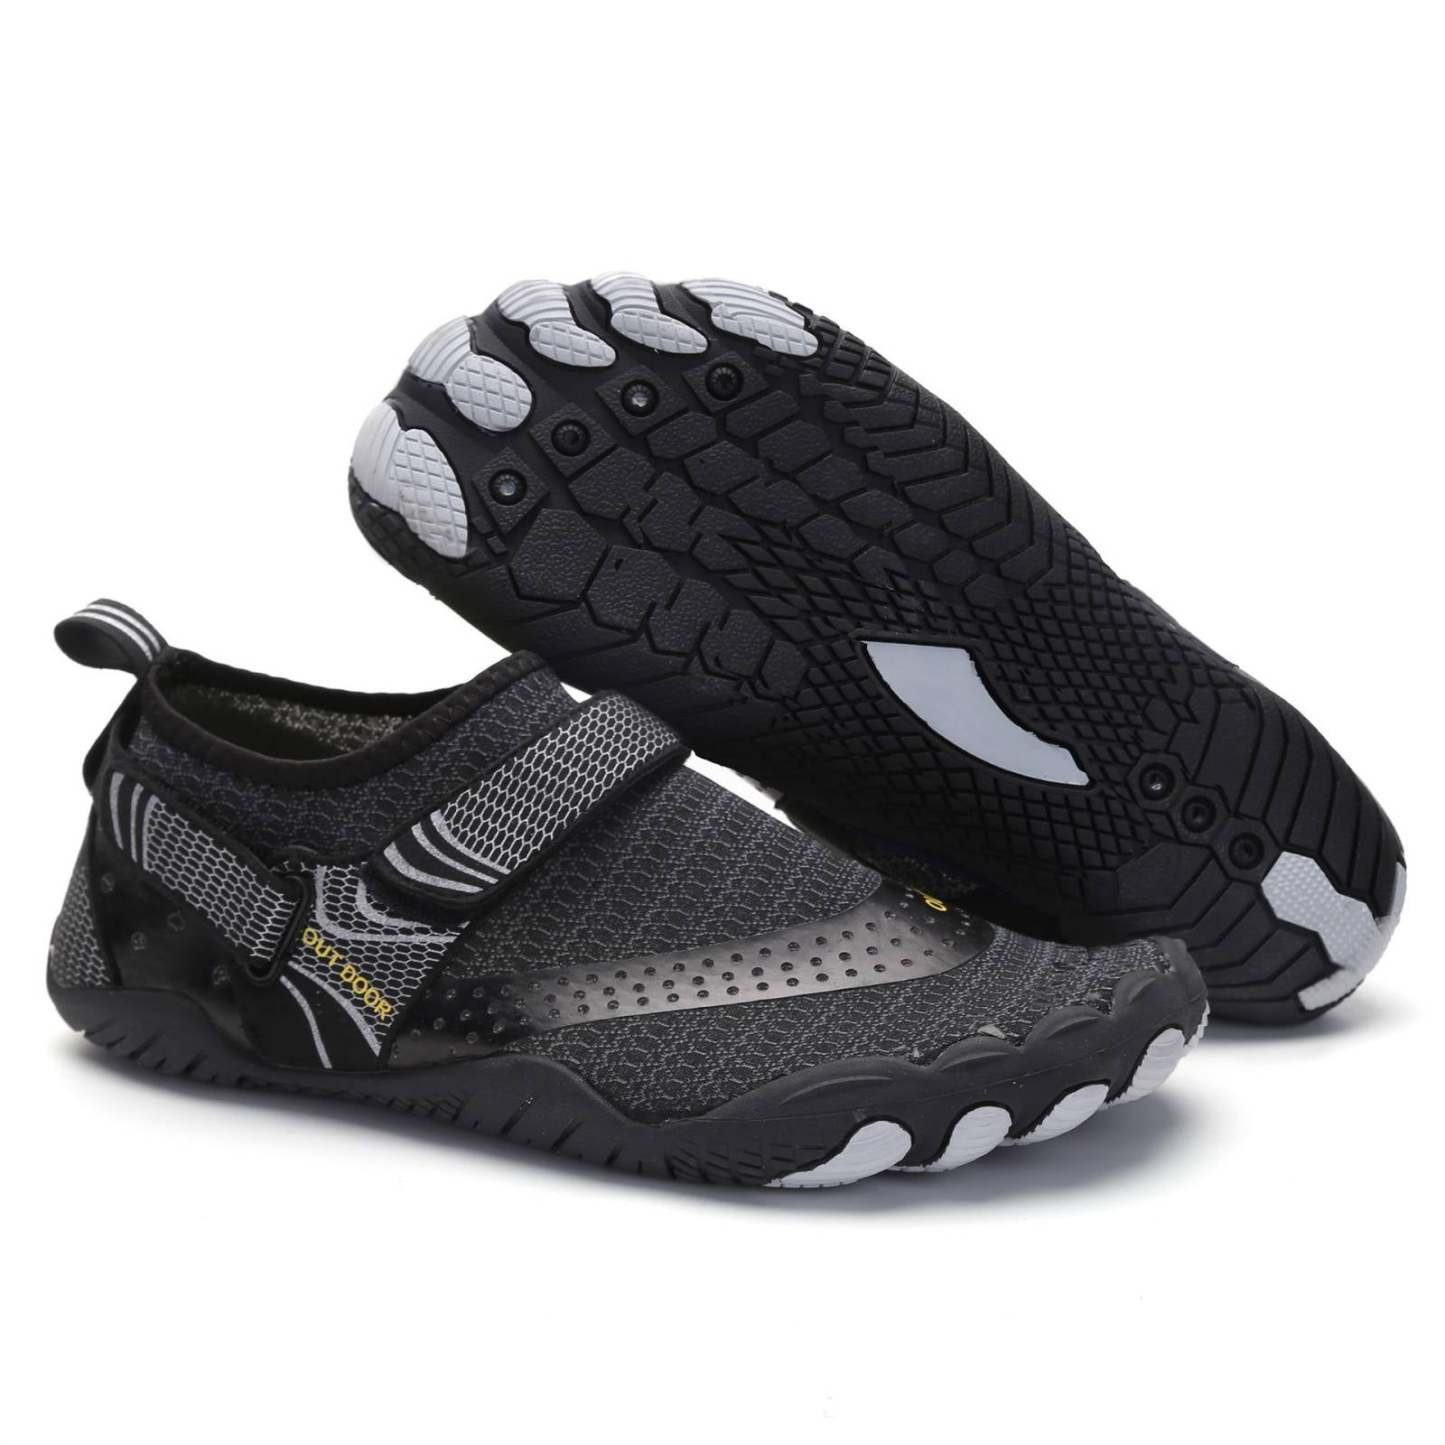 Water Shoes For Men & Women - Barefoot Non-Slip Aqua Sports Quick Dry